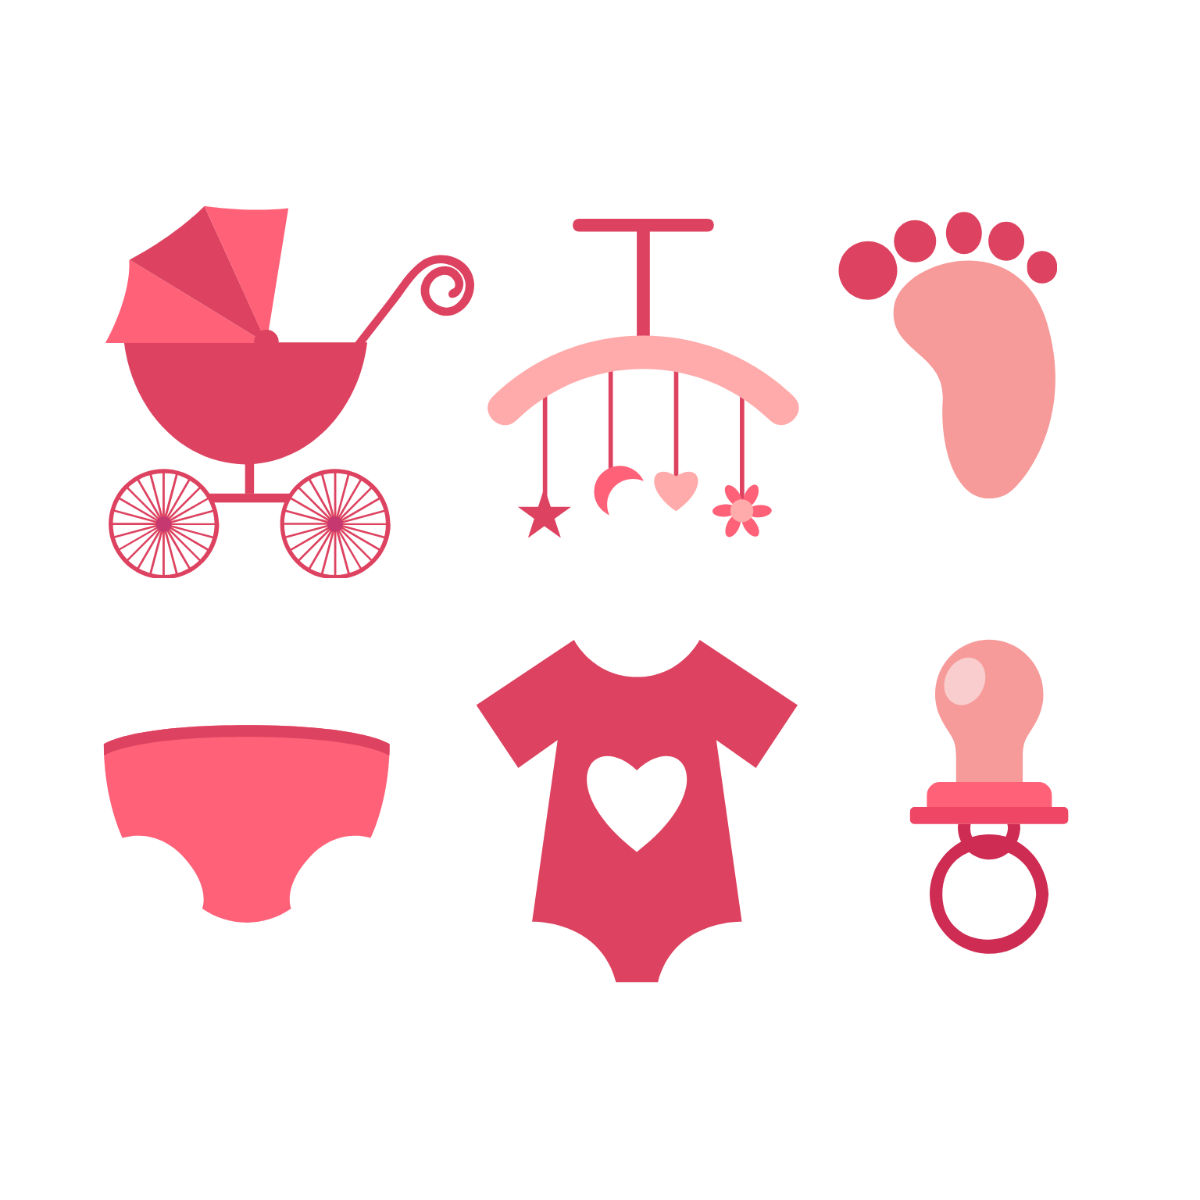 Baby Symbols